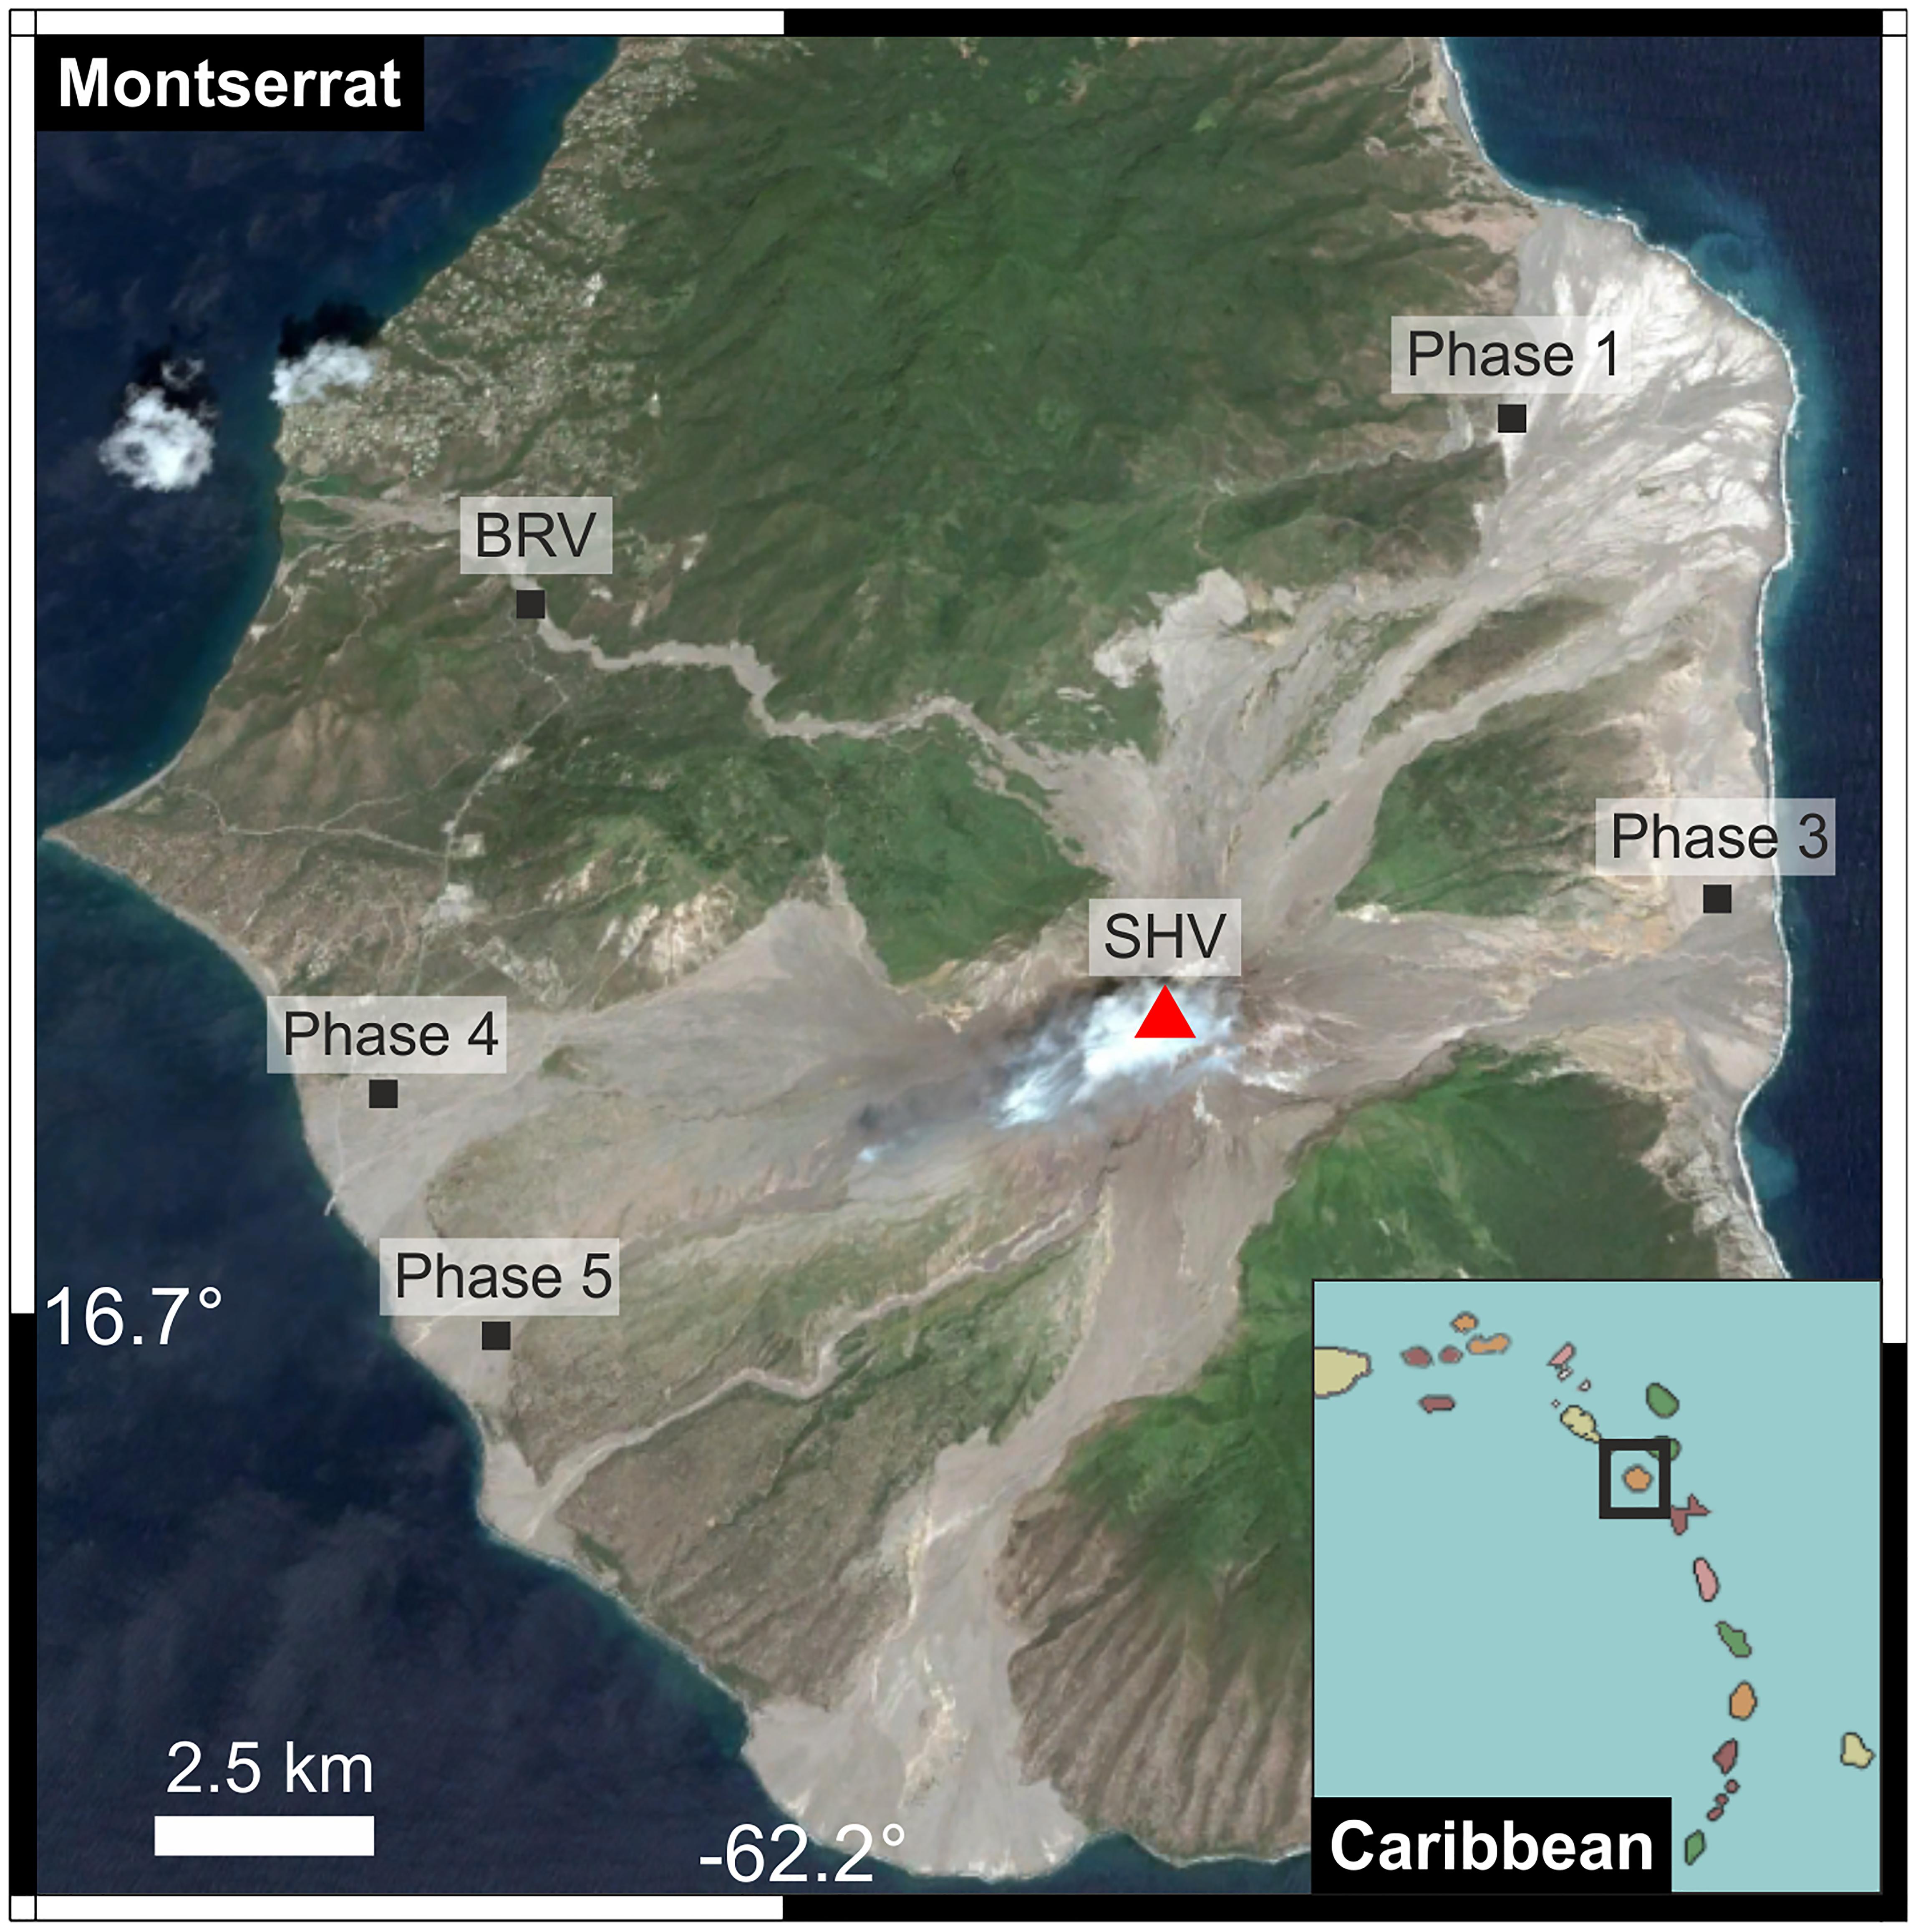 montserrat volcano eruption 1995 case study